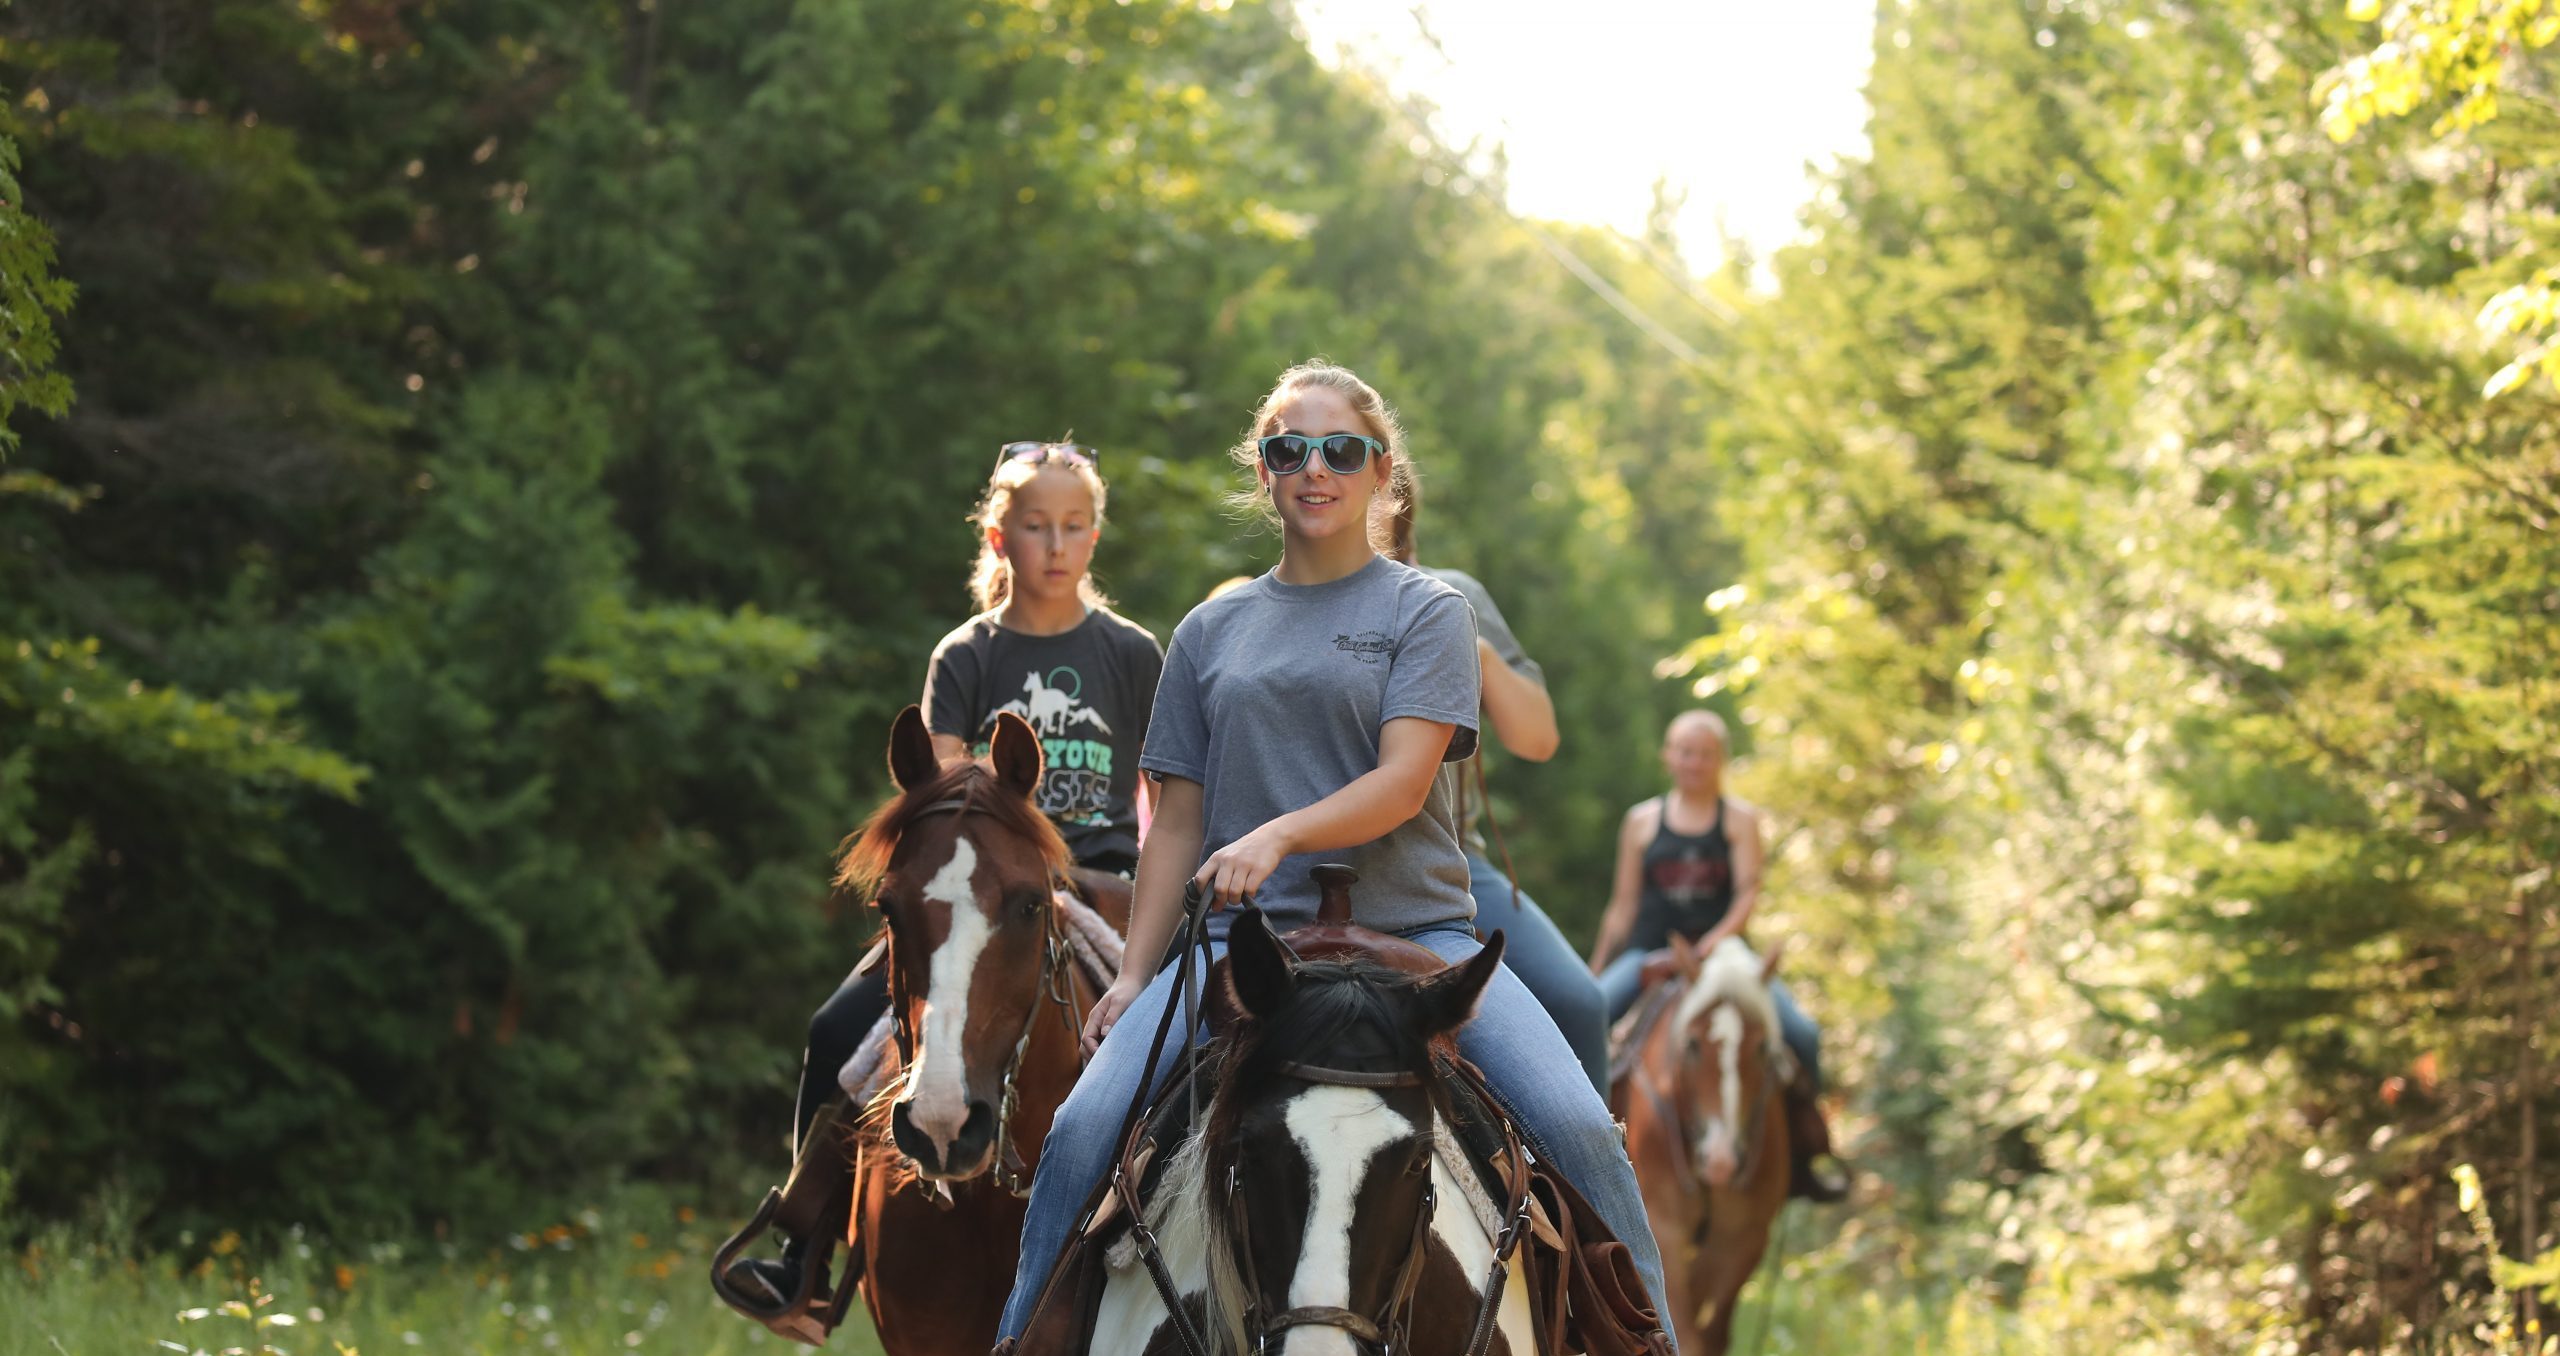 Horseback riding through Mackinac Island State Park is one of many outdoor activities to enjoy on Mackinac Island.